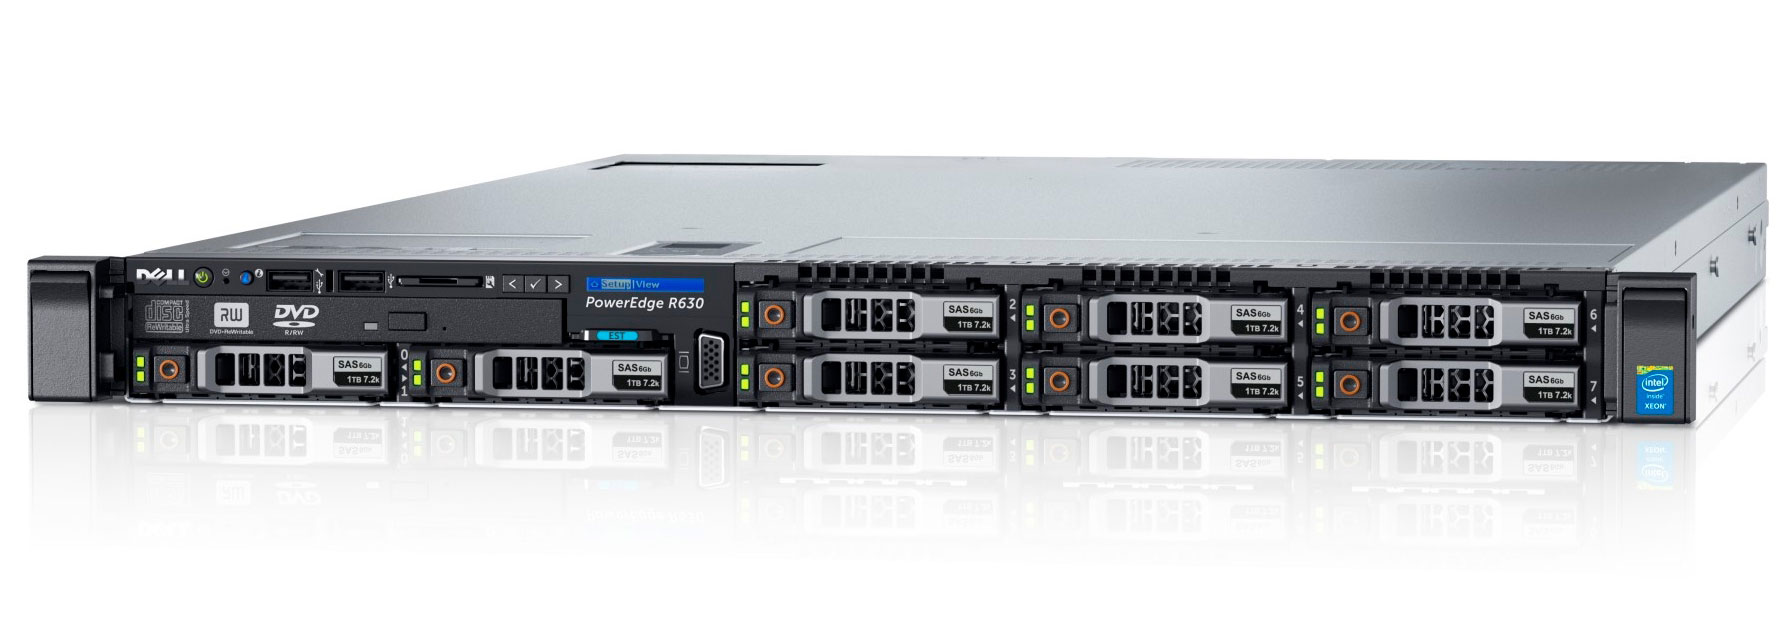 Подробное фото Сервер DELL PowerEdge R630 Xeon 2x E5-2637v3 64Gb 2133P DDR4 8x noHDD 2.5", SAS RAID Perc H730 mini, 1024Mb, DVD, 2*PSU